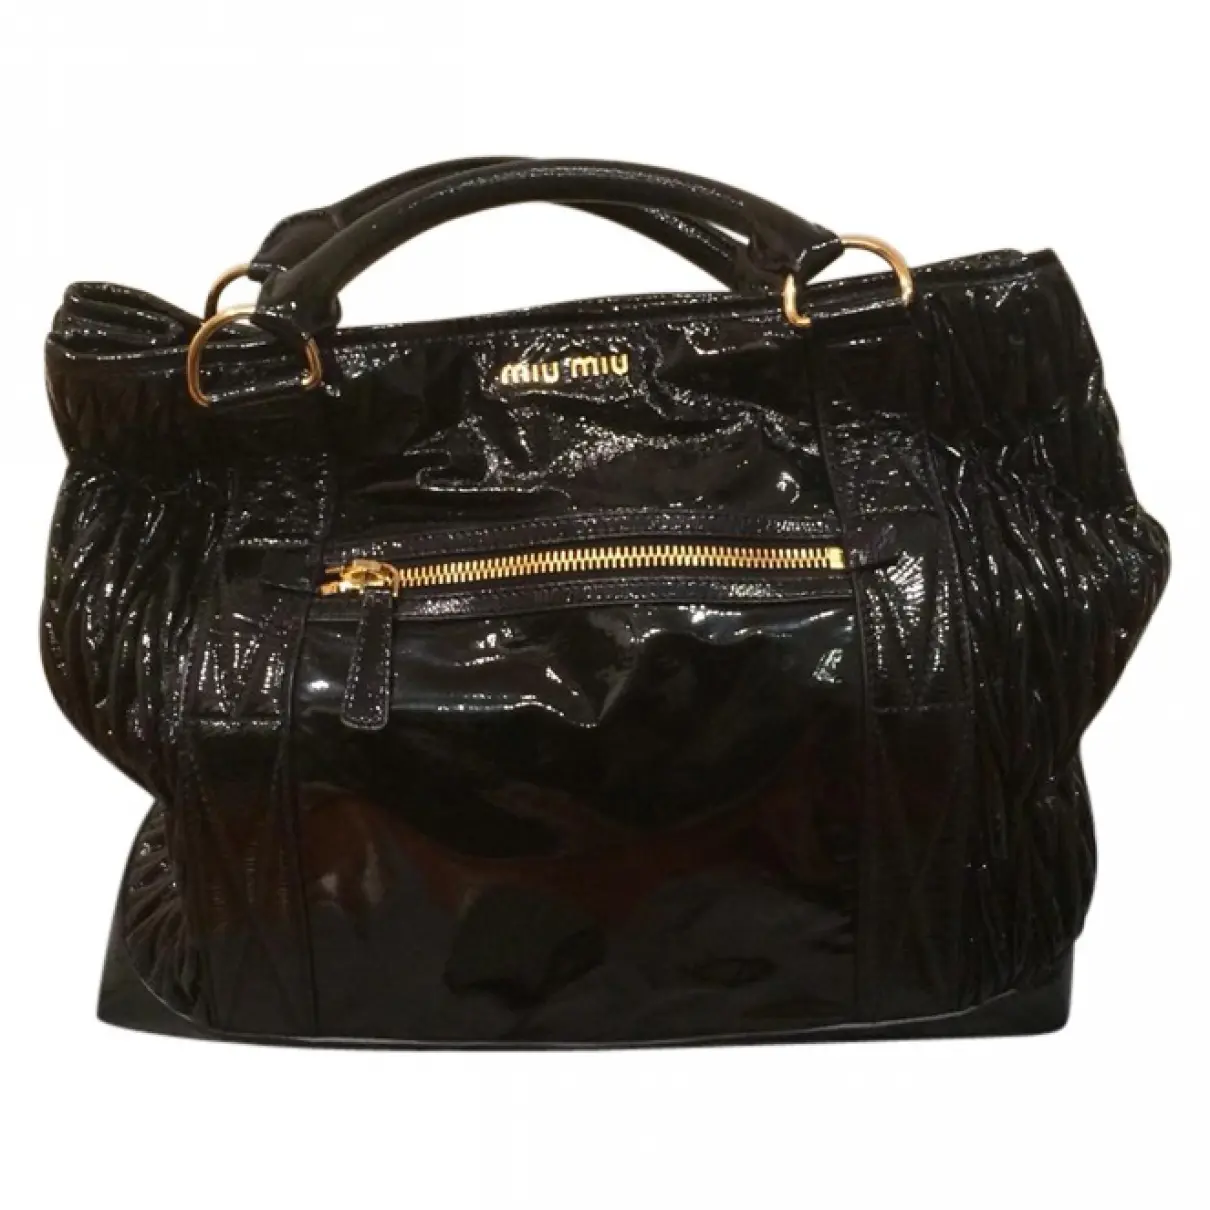 Black Patent leather Handbag Matelassé Miu Miu